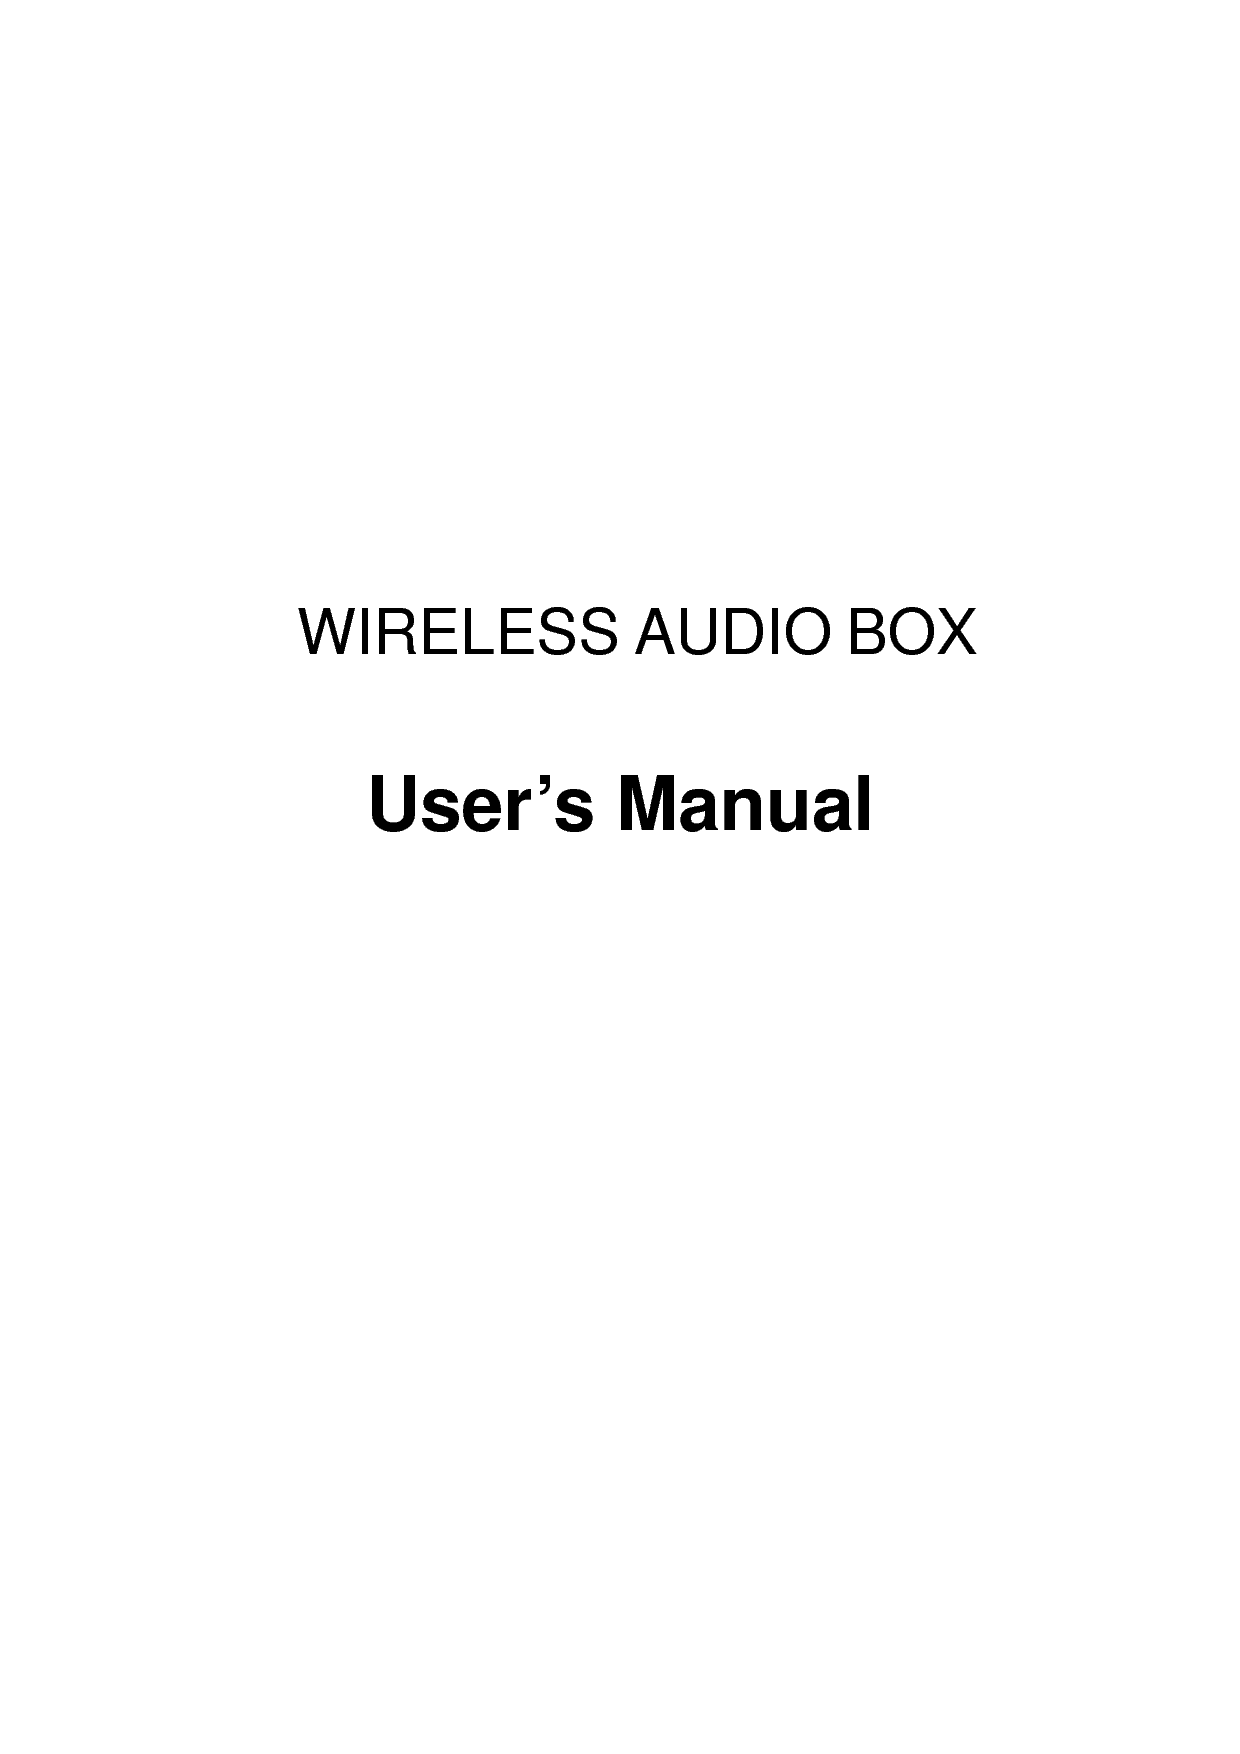       WIRELESS AUDIO BOX User’s Manual        